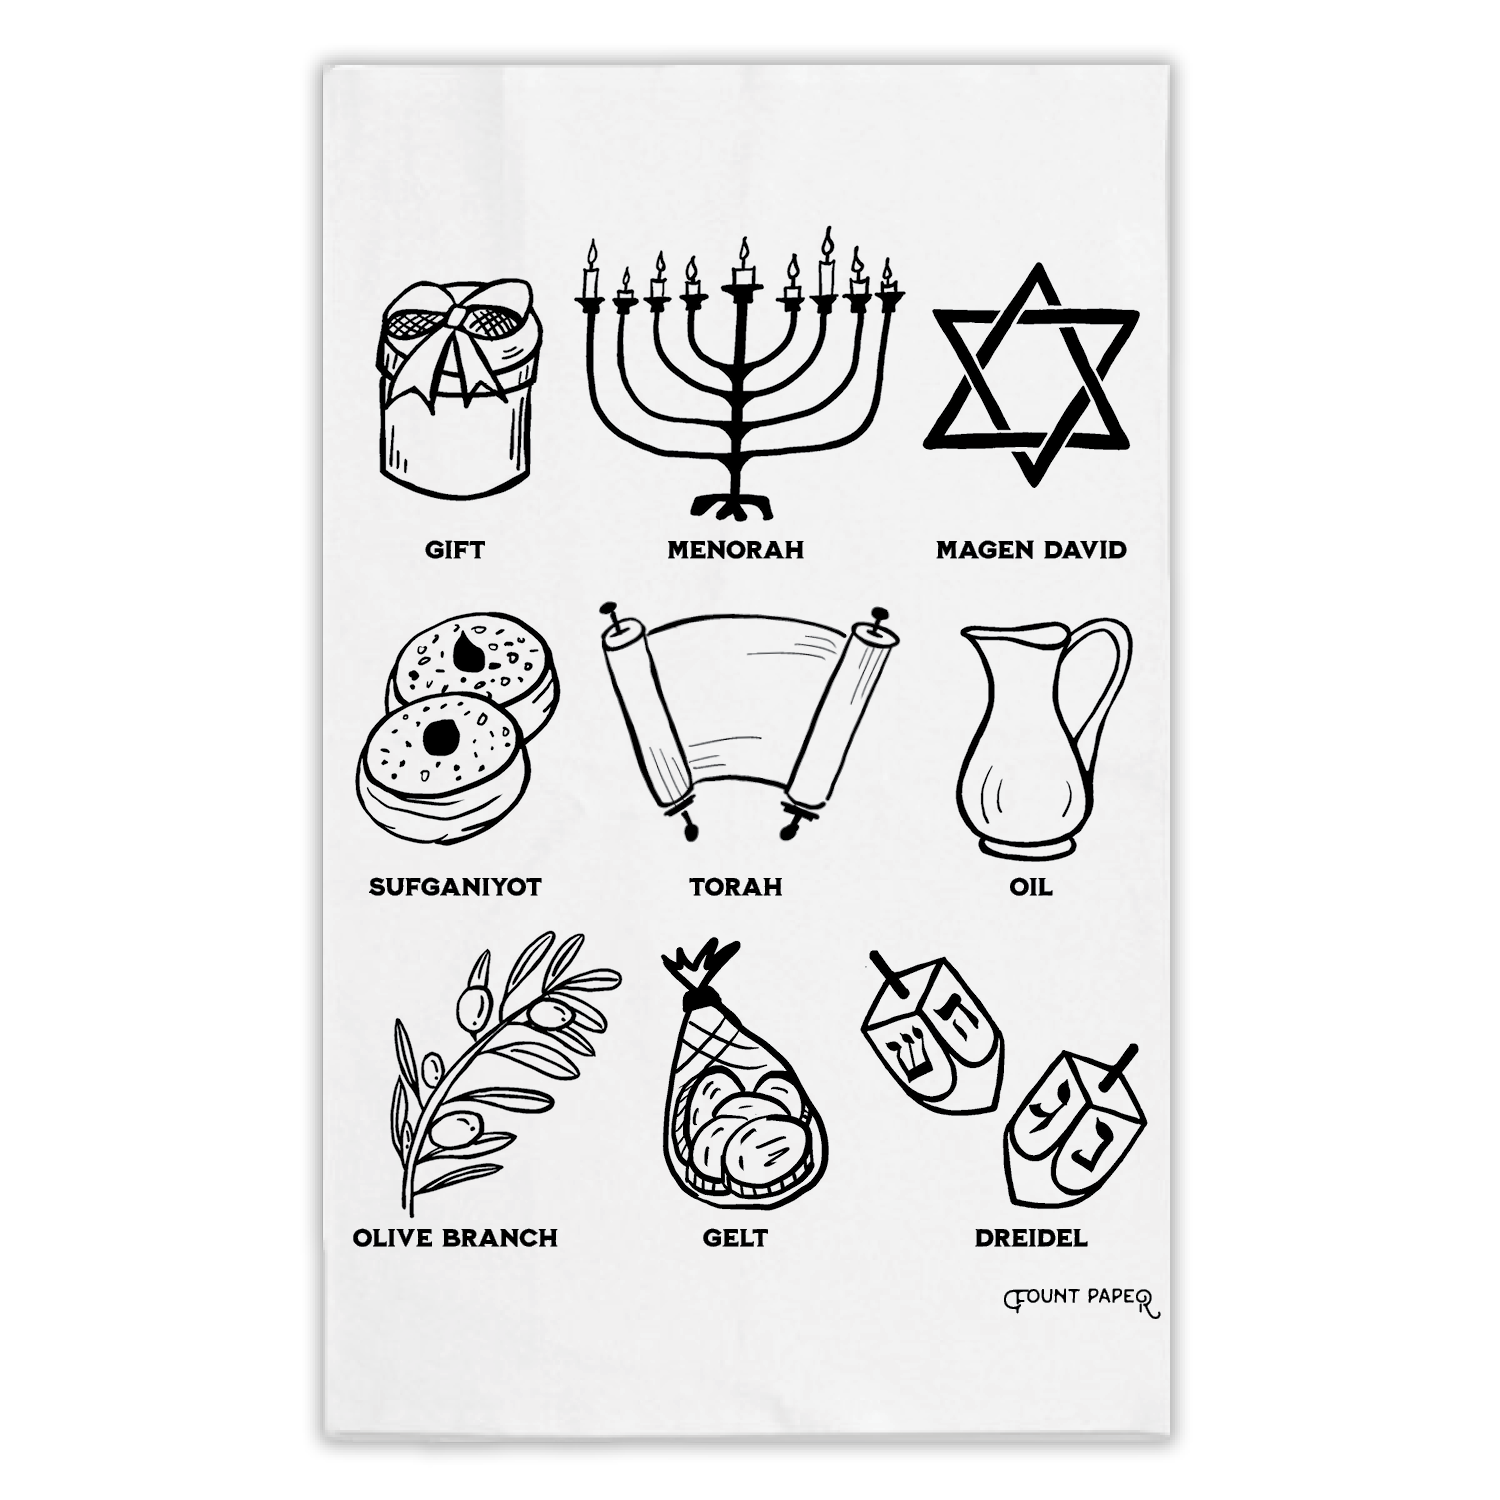 Hanukkah tea towel printed with a menorah, star of david or magen david, sufganiyot, torah, oil, olive branch, gelt, dreidel, and gifts